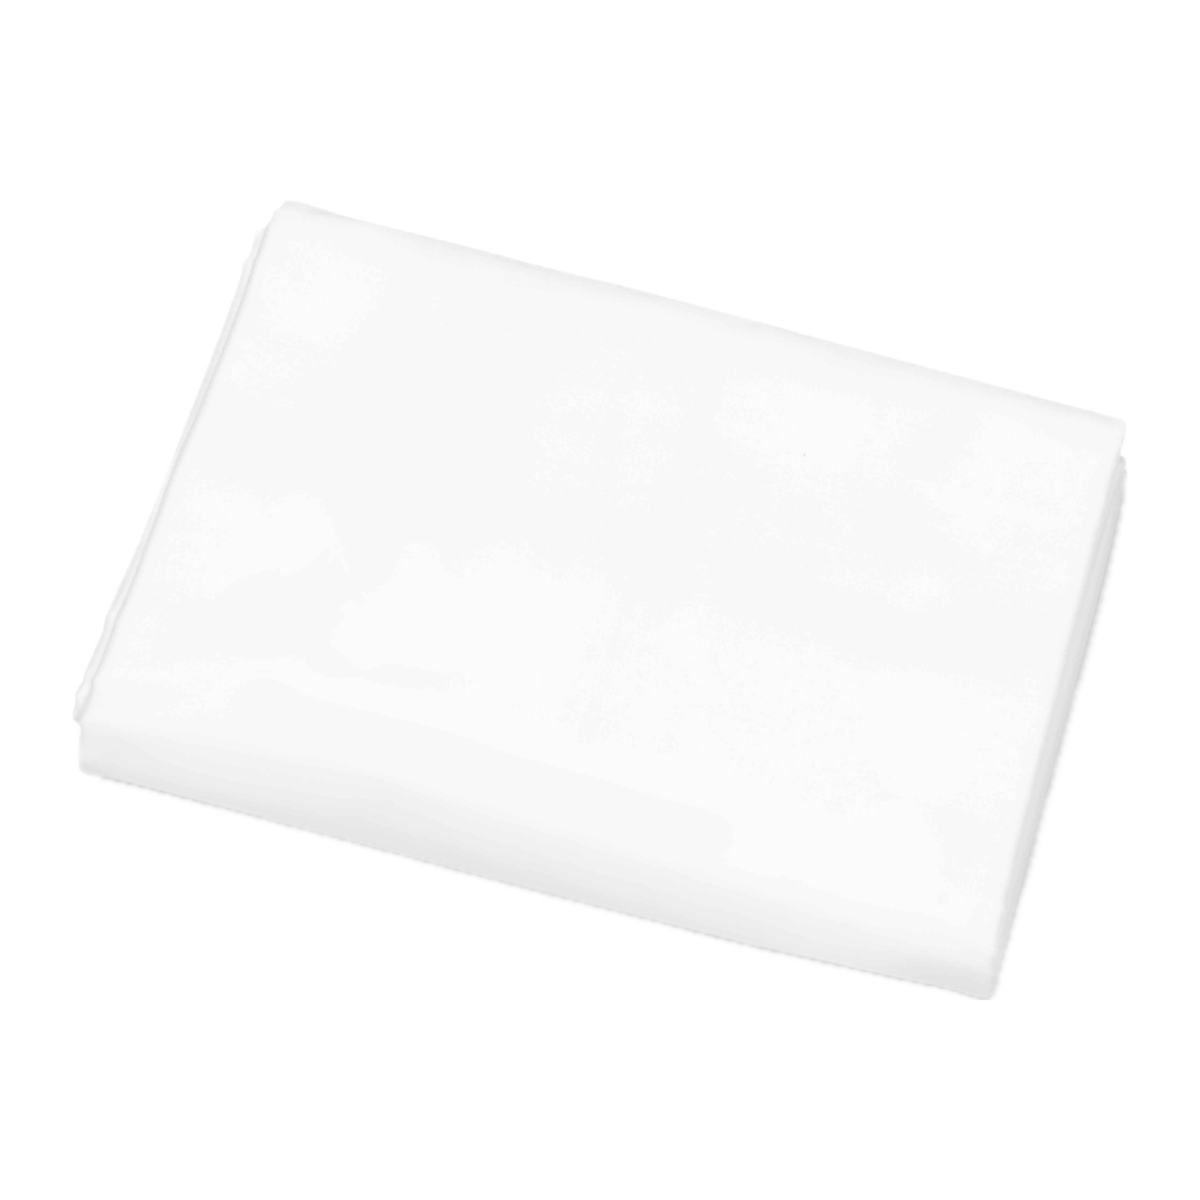 Folded Signoria Nuvola Duvet Cover in White Color